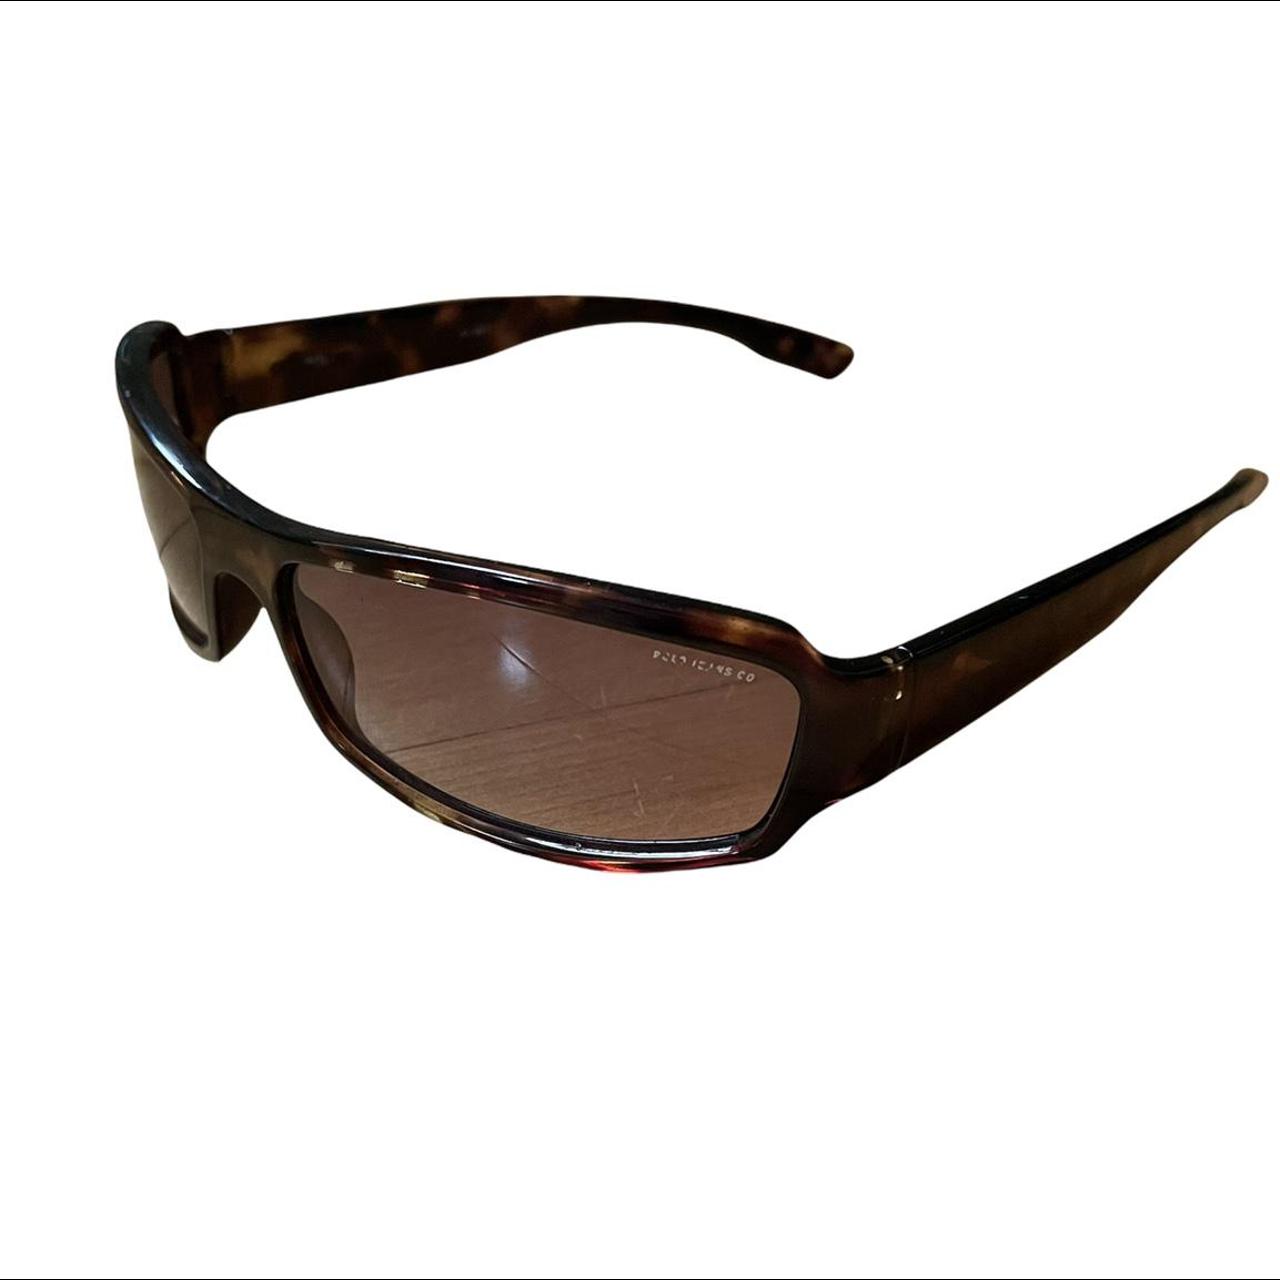 Product Image 2 - 90s Ralph Lauren sunglasses
Wrap sunglasses
some